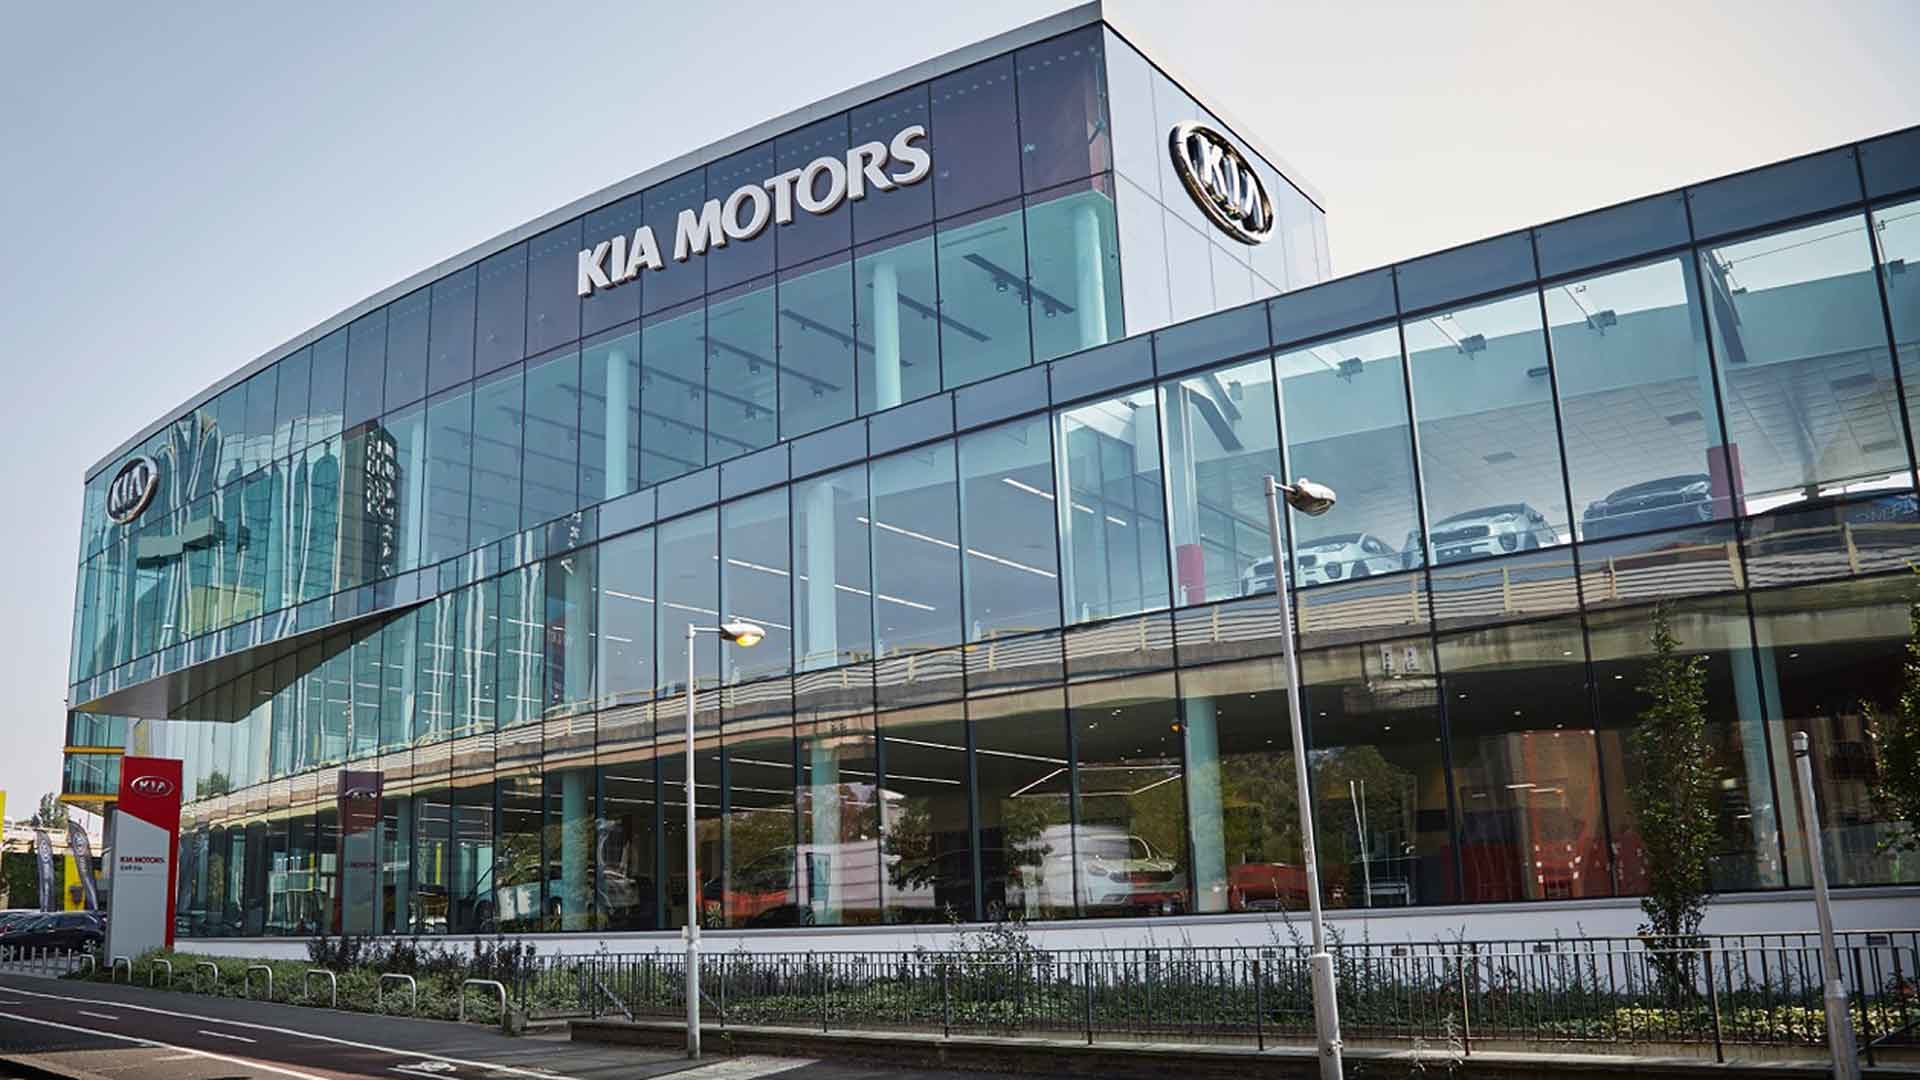 Kia Motors UK retailer